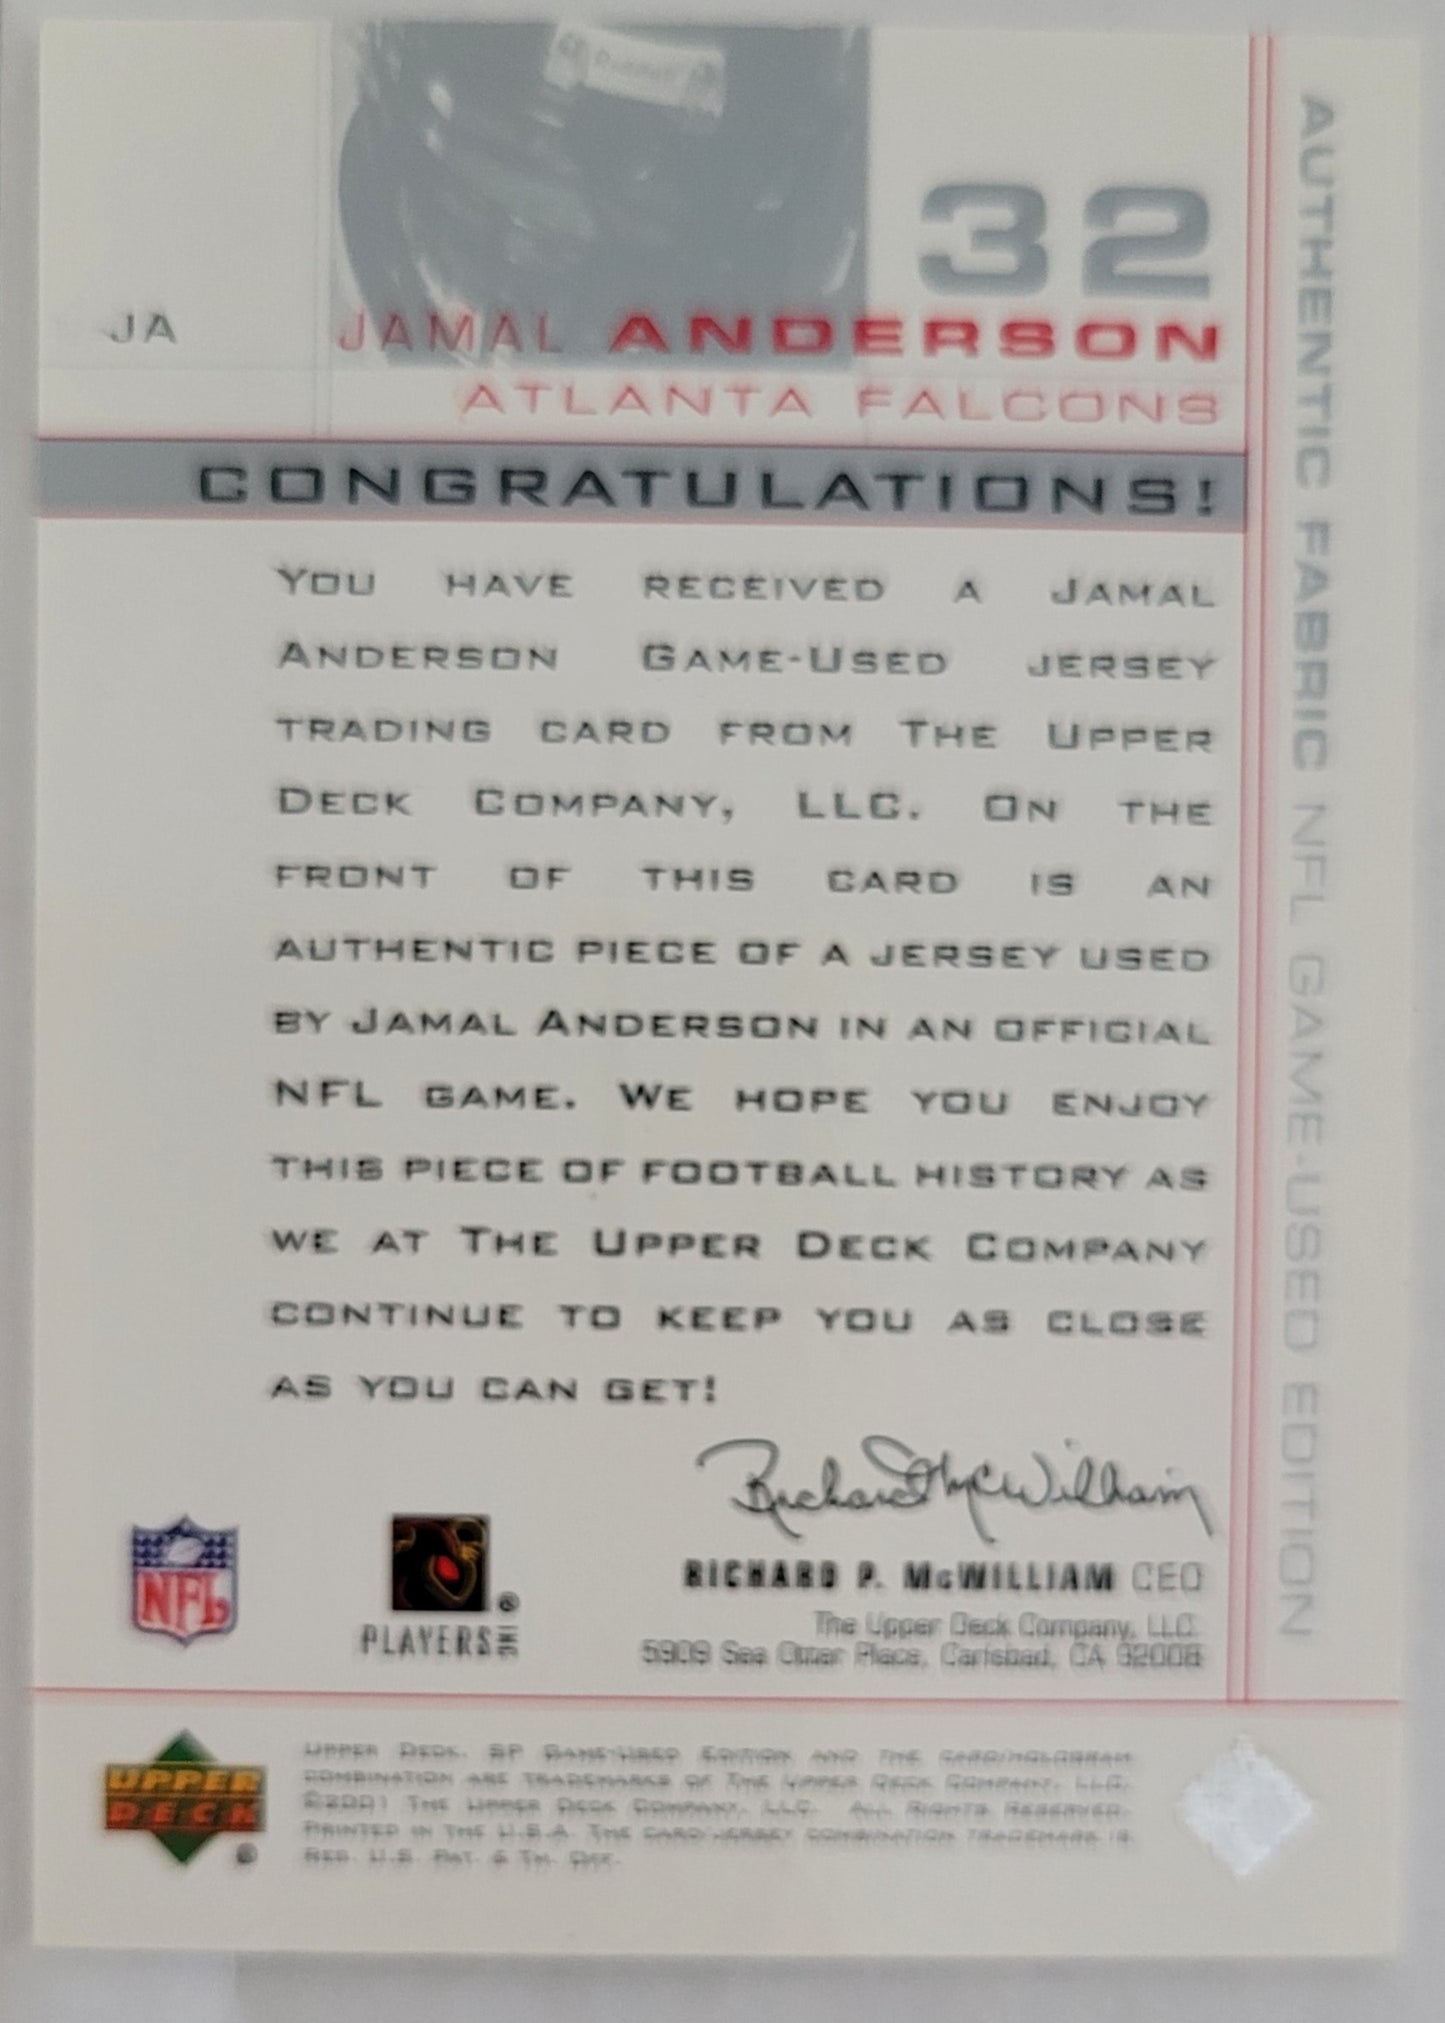 Jamal Anderson - 2001 SP Game Used Edition Authentic Fabric #JA - Atlanta Falcons